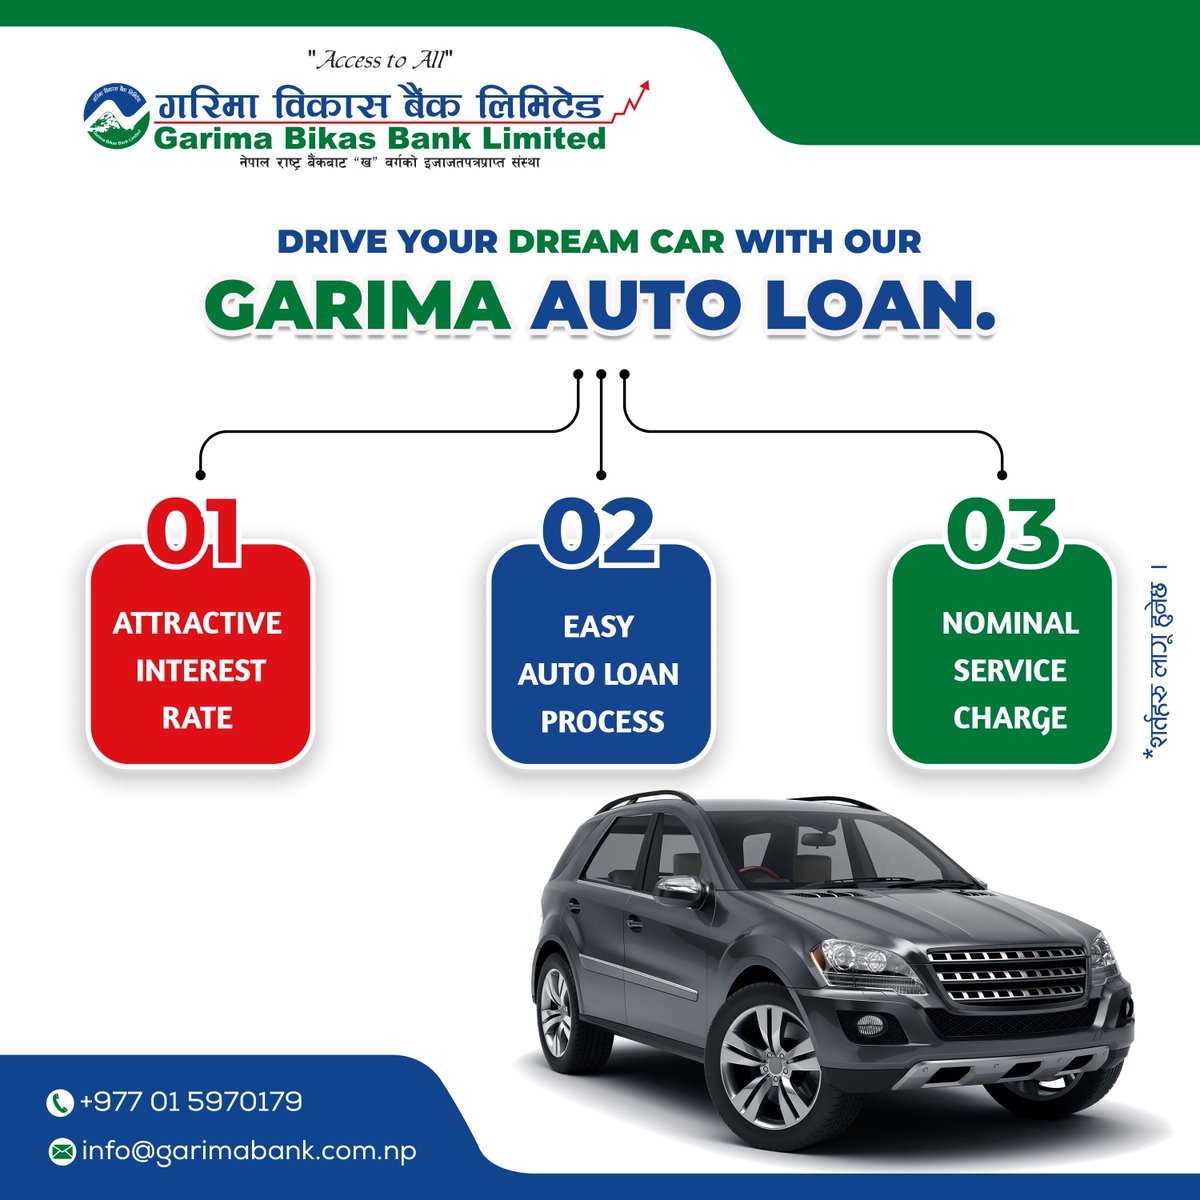 Drive your dream car🚗 with  Garima Auto Loan .
#garimabikasbanklimited
#AccessToAll
#safedigitalbanking
#savingfuture
#garimaautoloan